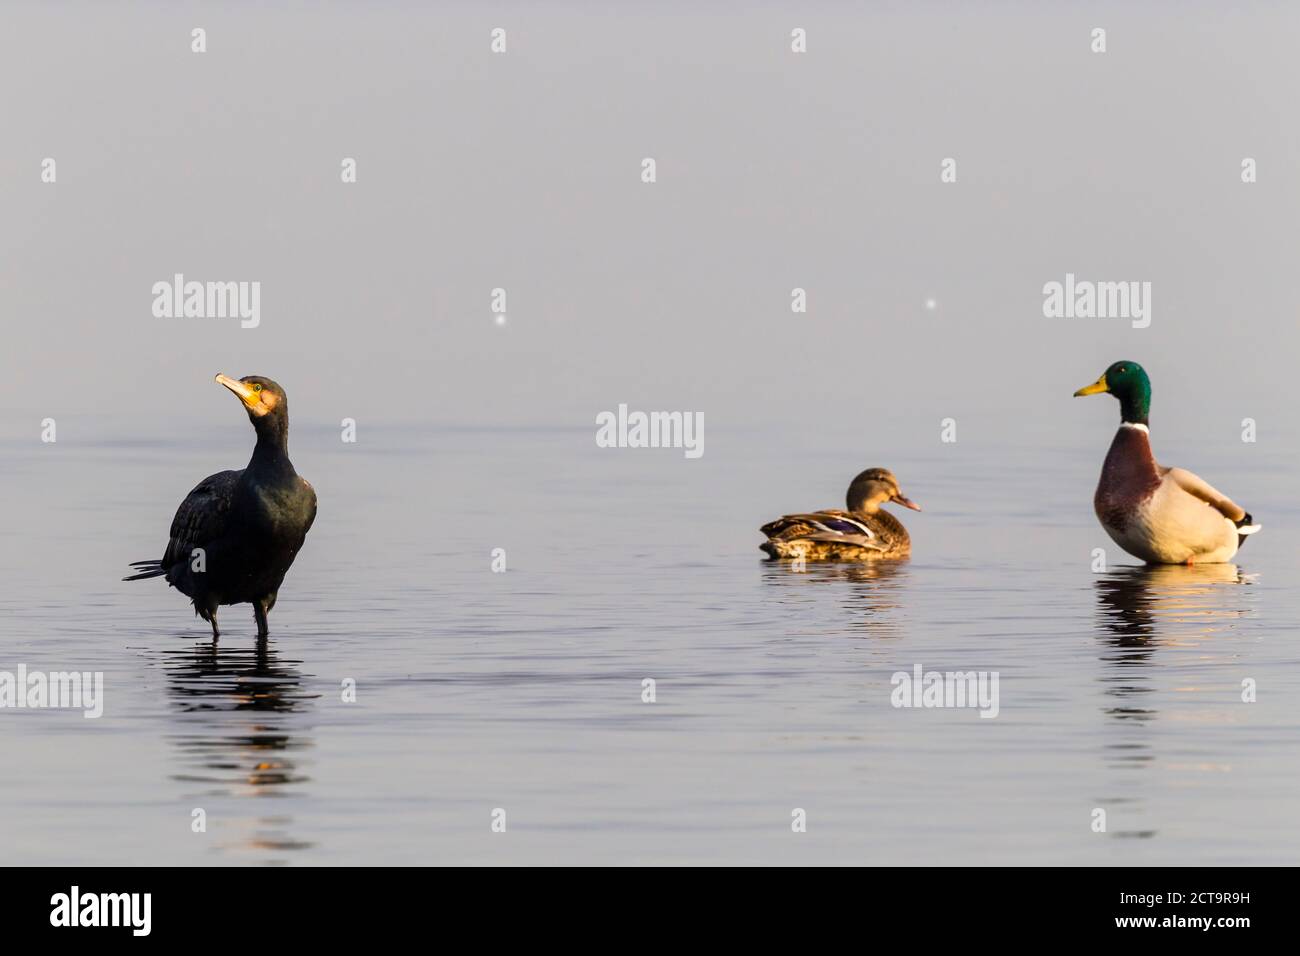 Germany, Timmendorfer Strand, Cormorant and ducks at Baltic Sea Stock Photo